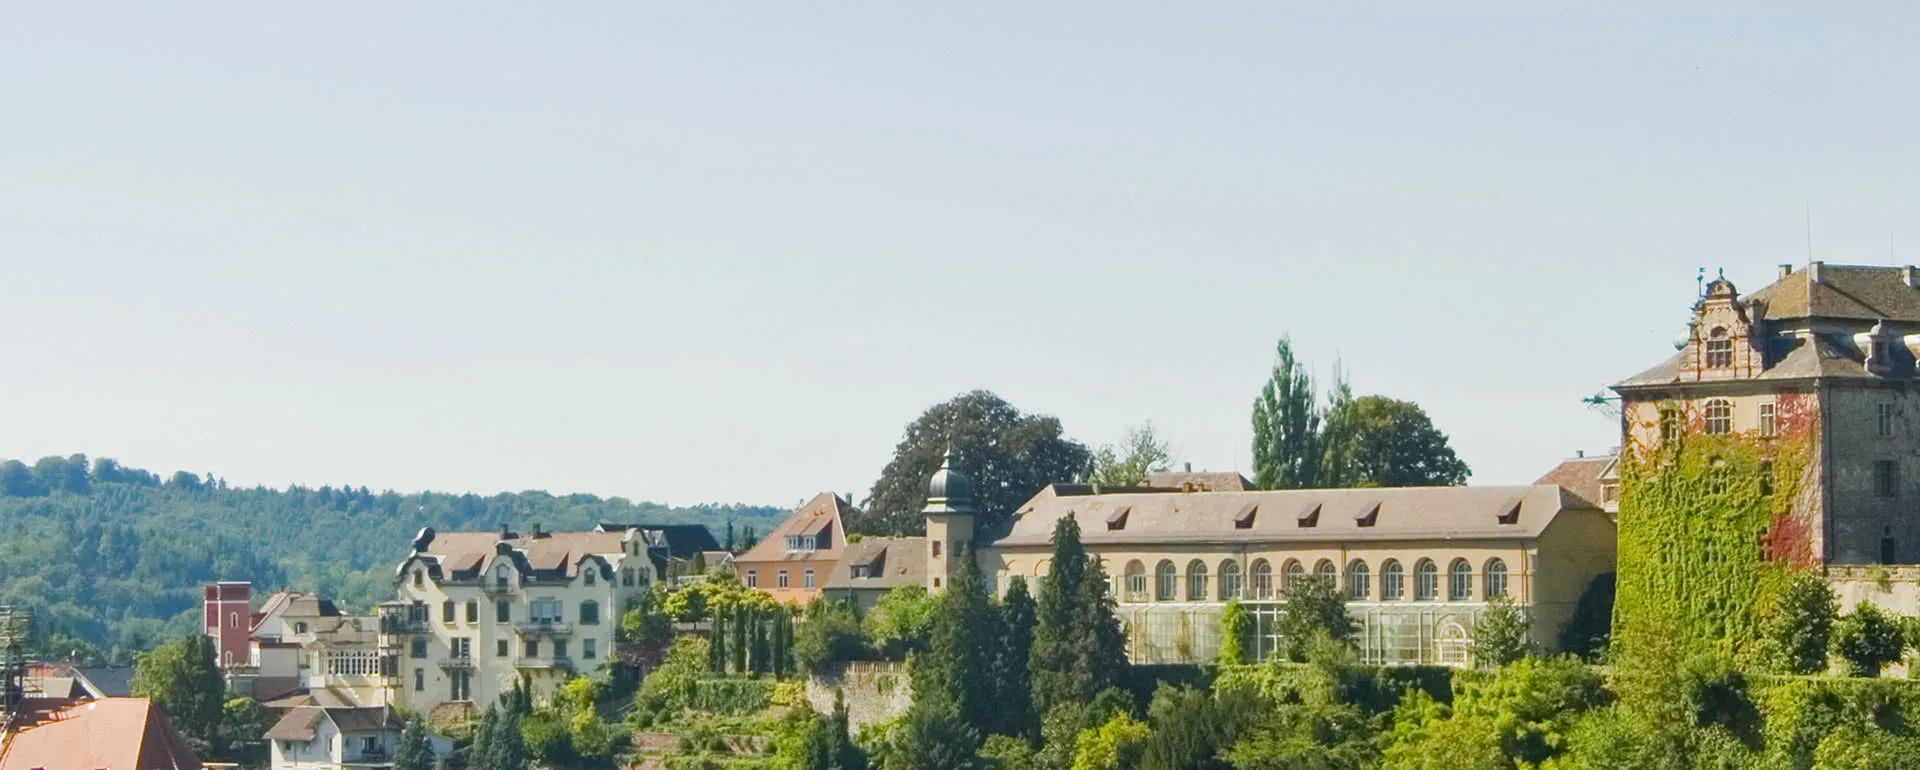 Baden-Baden Panorama Bild